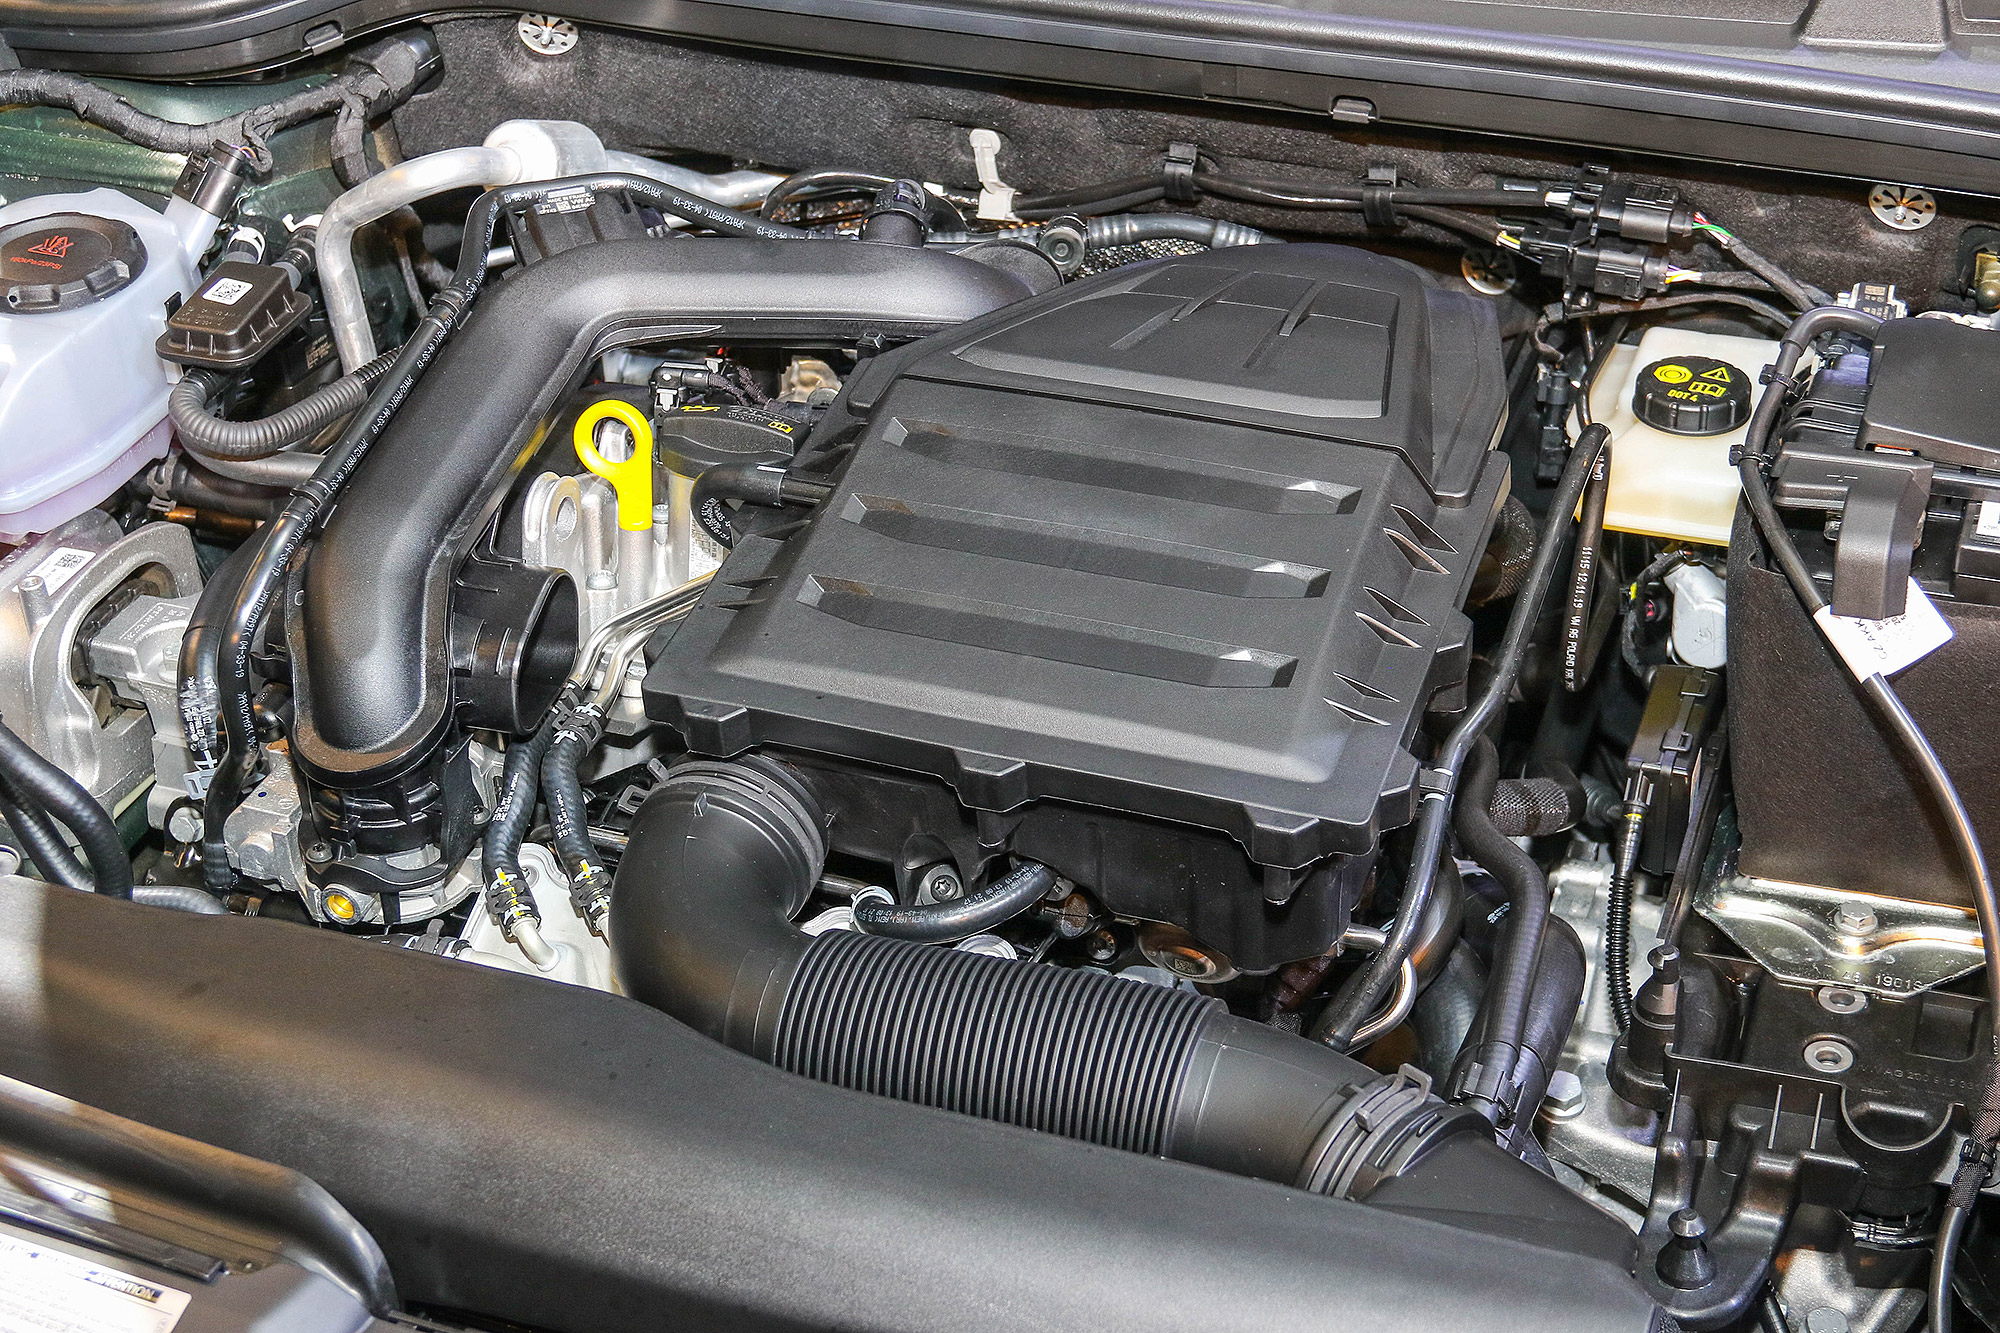 1.0 TSI 引擎動力輸出數字為 115 匹馬力與 20.4 公斤米扭力。